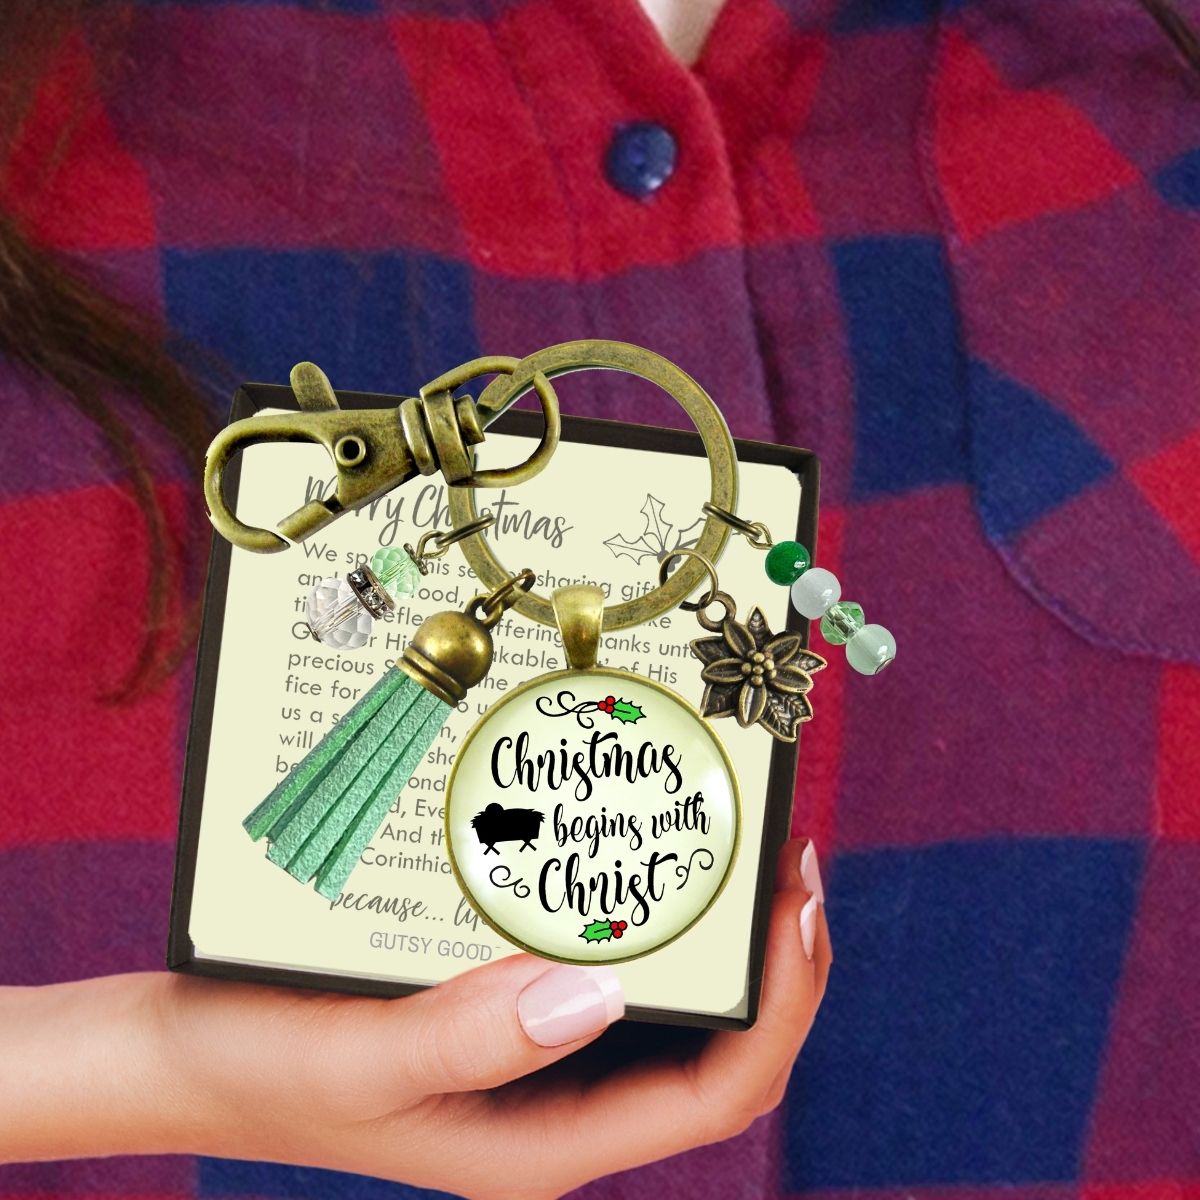 Merry Christmas Keychain Christmas Begins With Christ Faith Jewelry Handmade Candle Charm Gift   - Gutsy Goodness Handmade Jewelry